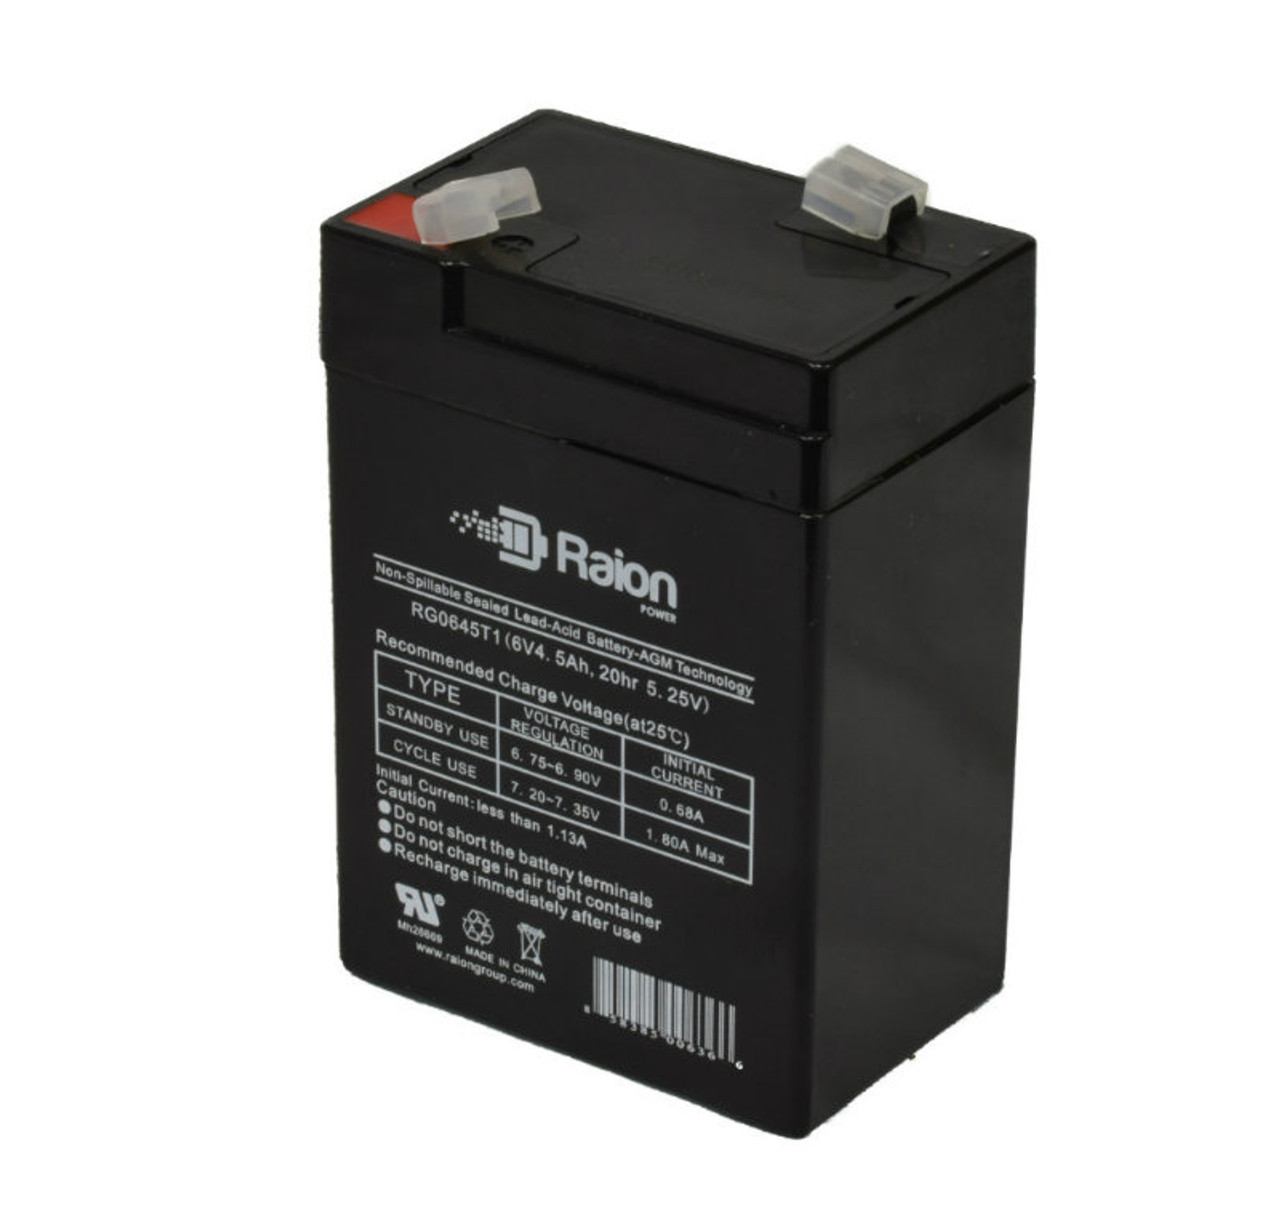 Raion Power RG0645T1 6V 4.5Ah Replacement Battery Cartridge for Sonnenschein A506/4.2 S